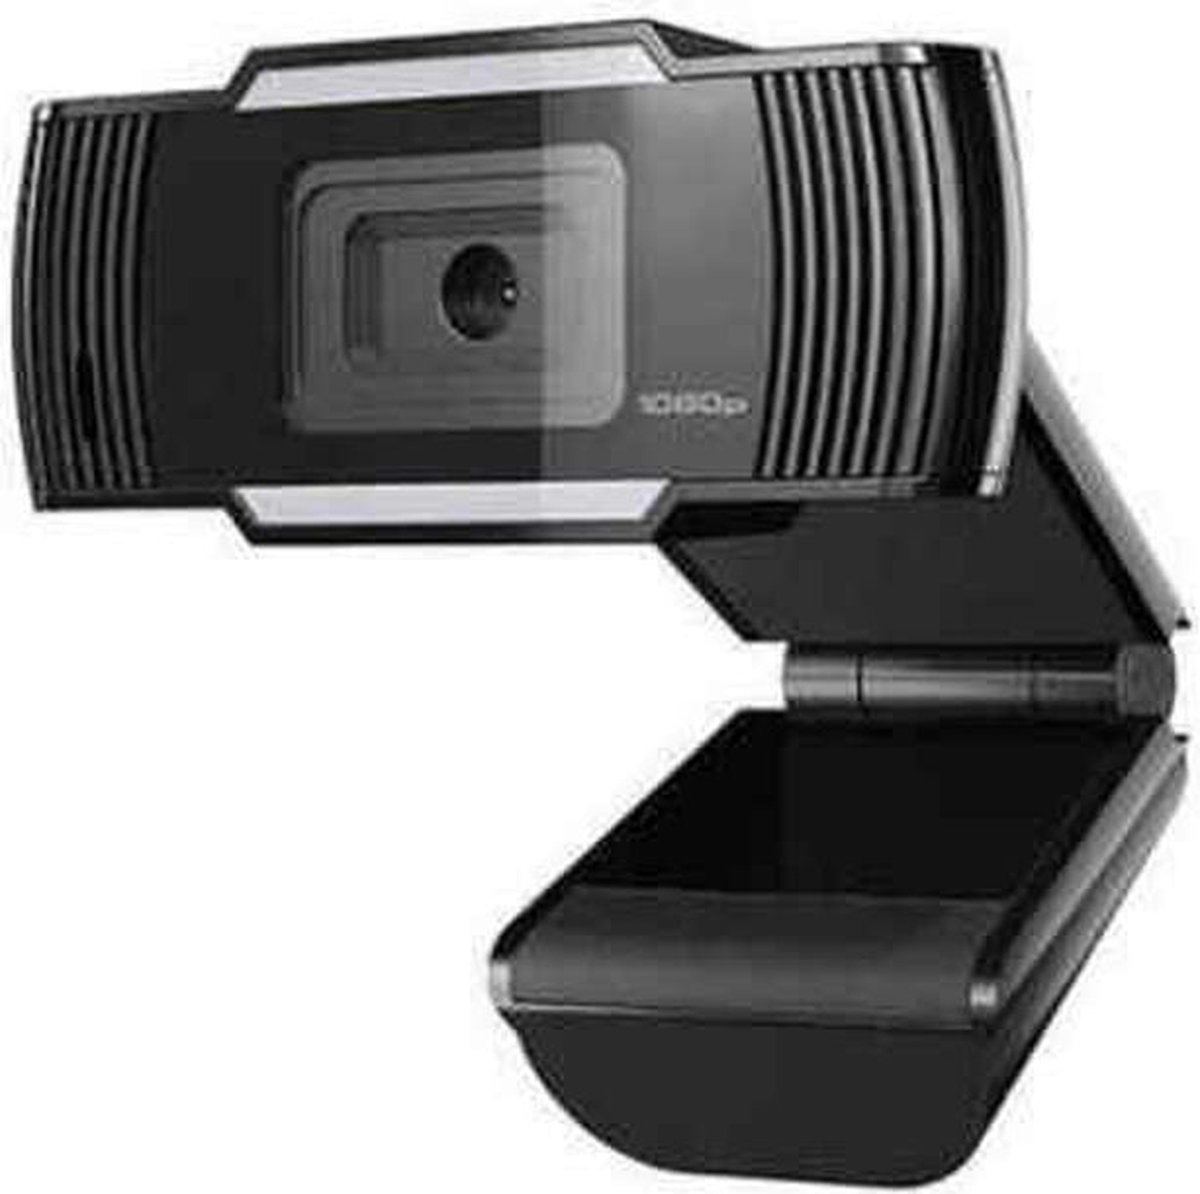 Natec GENESIS NKI-1672 webcam 1920 x 1080 Pixels USB 2.0 - Negro